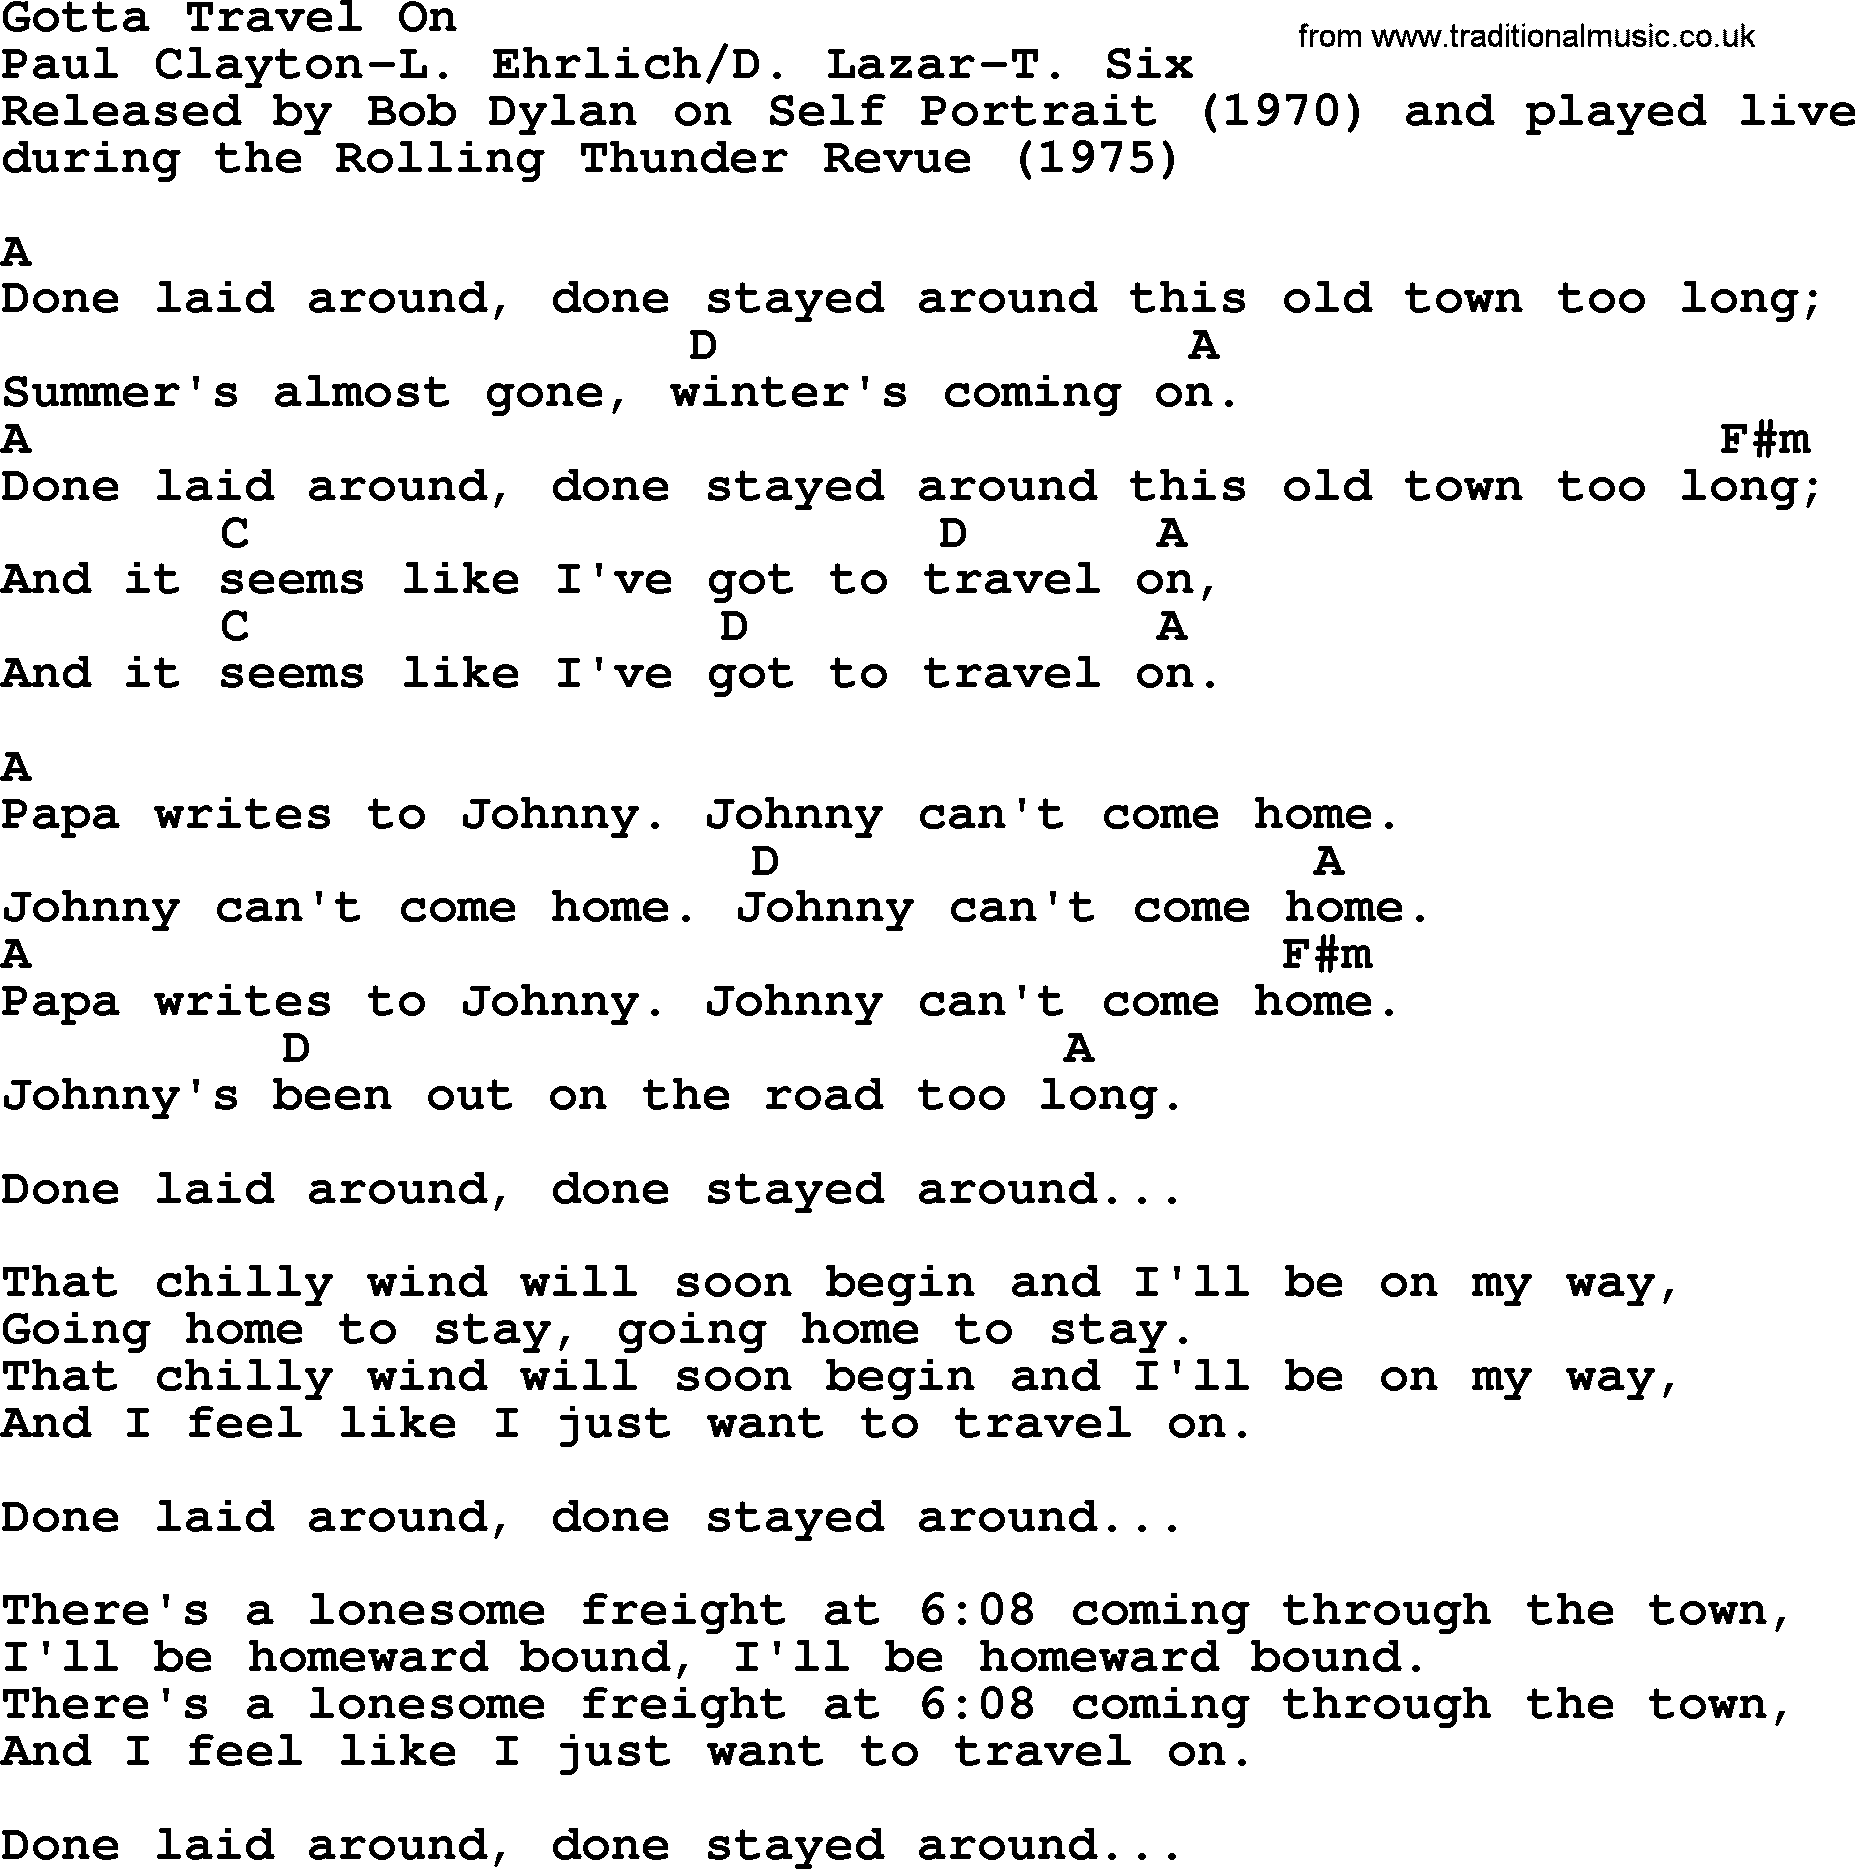 Bob Dylan song, lyrics with chords - Gotta Travel On